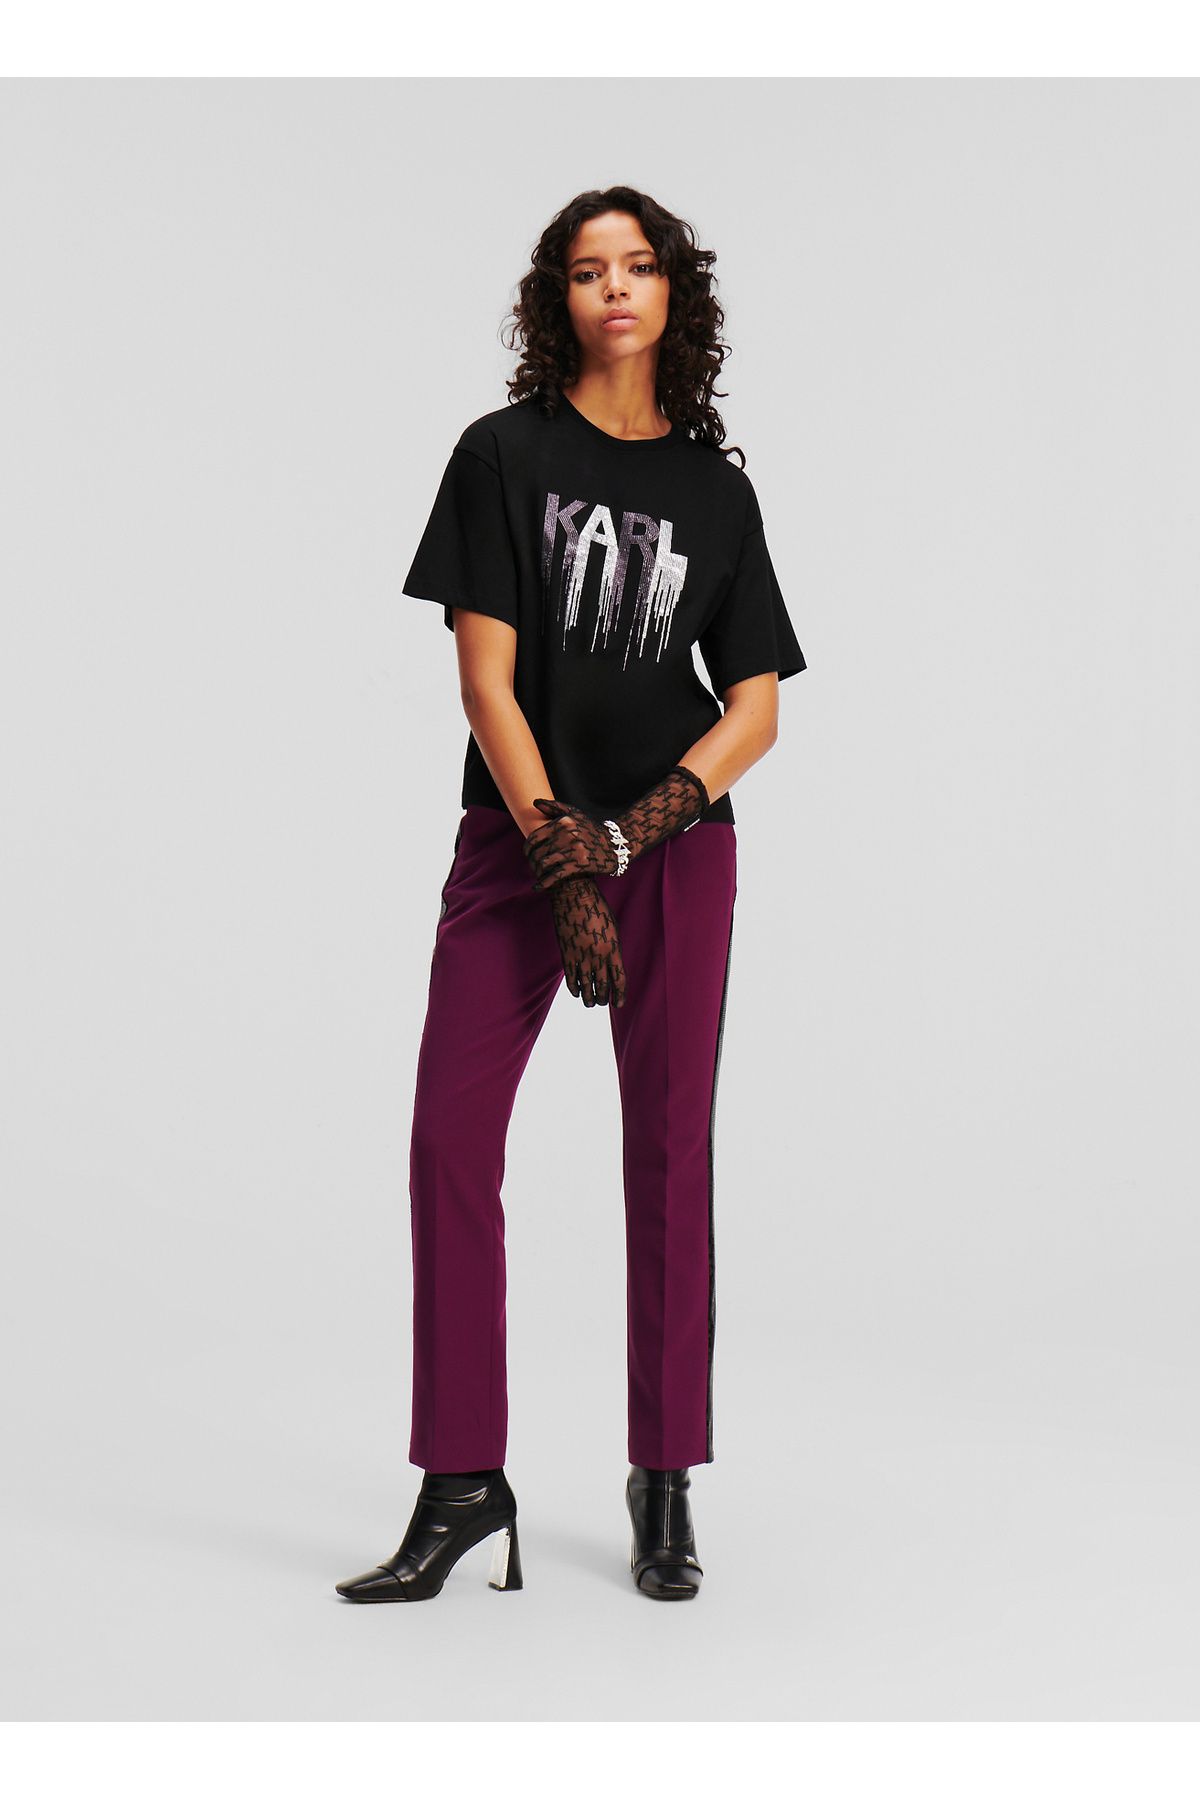 Karl Lagerfeld Bisiklet Yaka Baskılı Siyah Kadın T-Shirt 236W1714